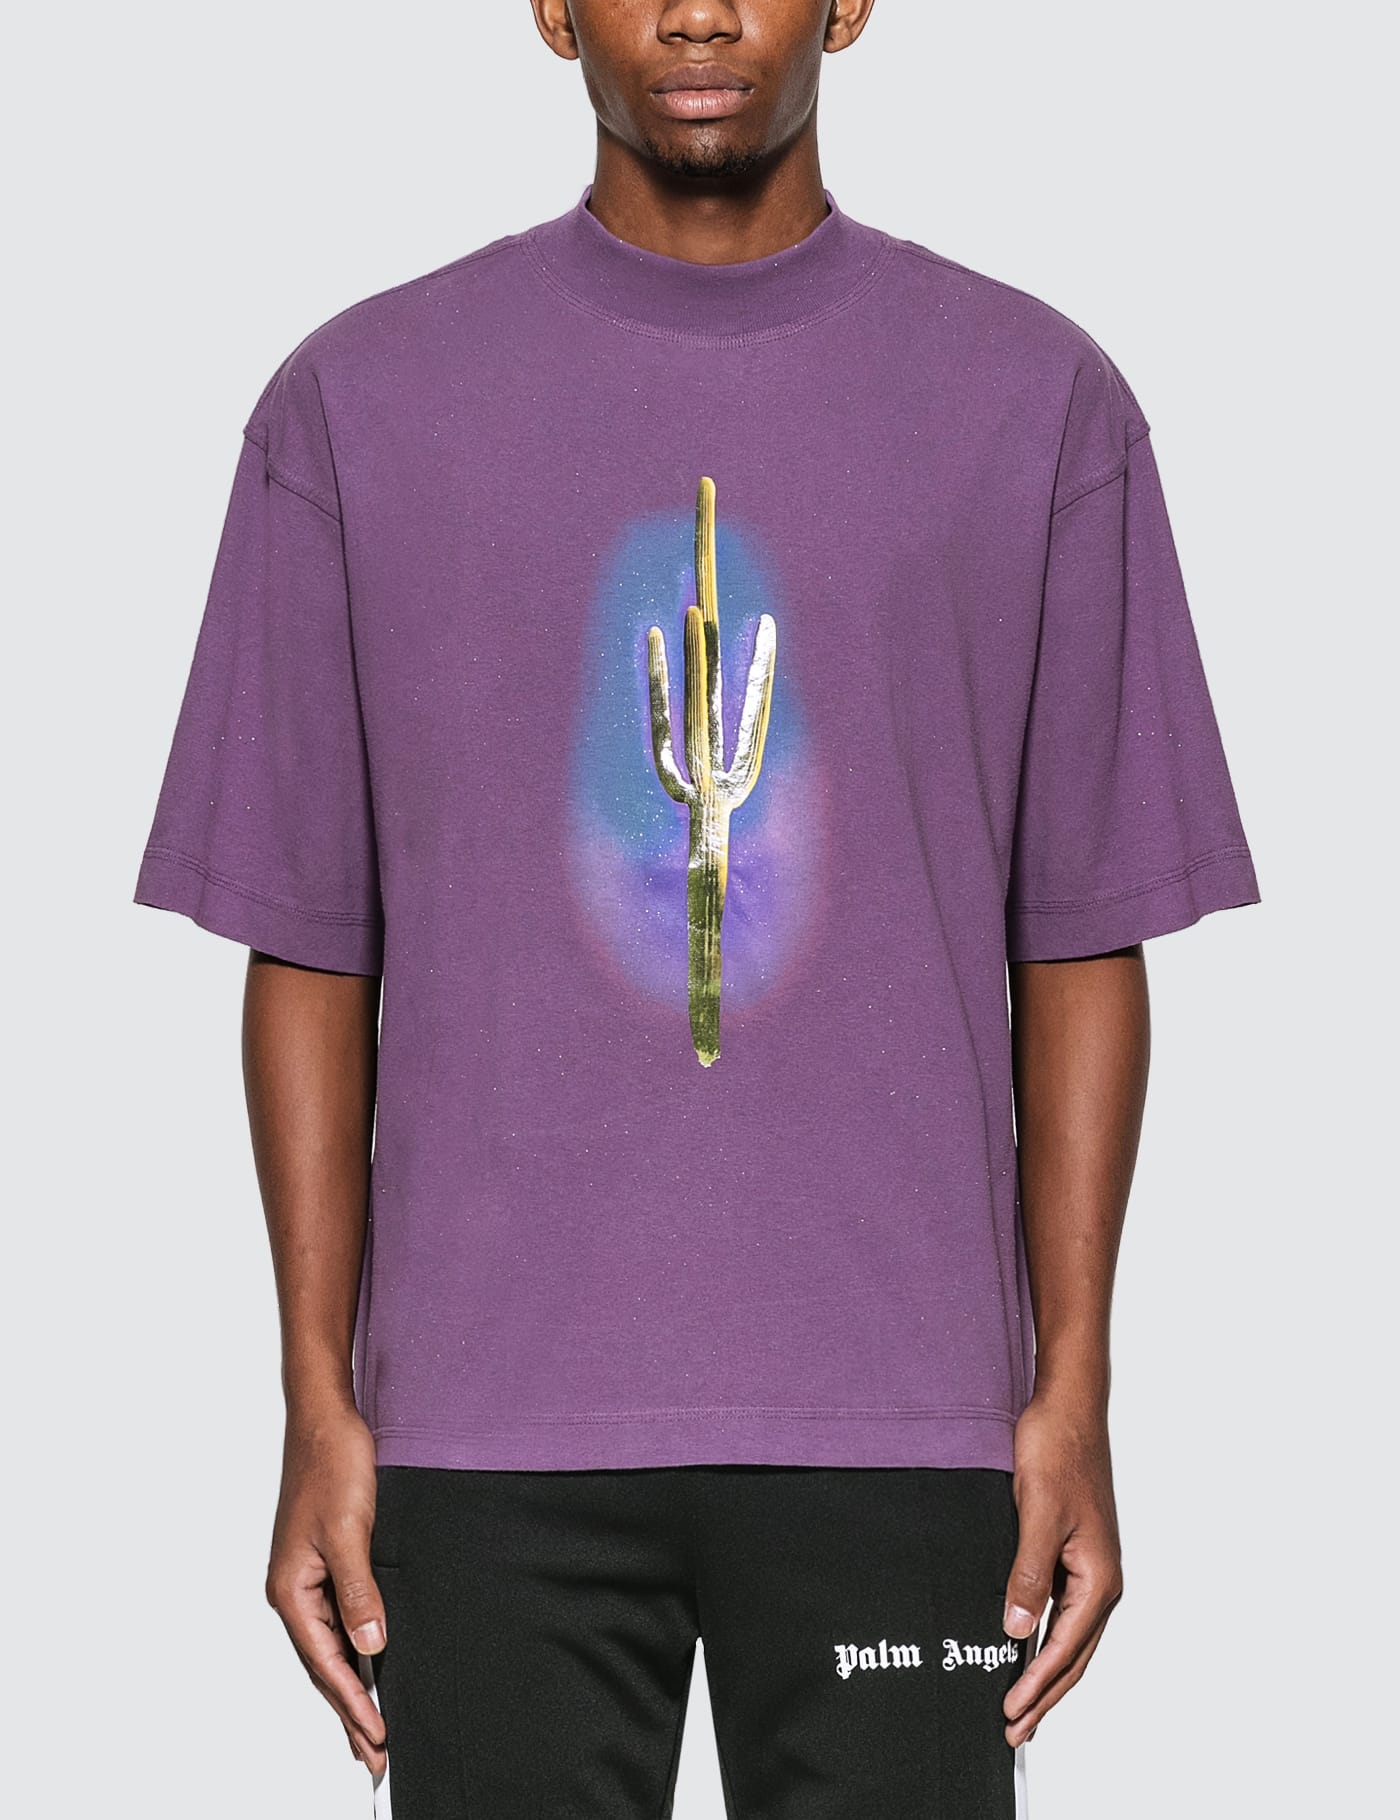 palm angels cactus shirt